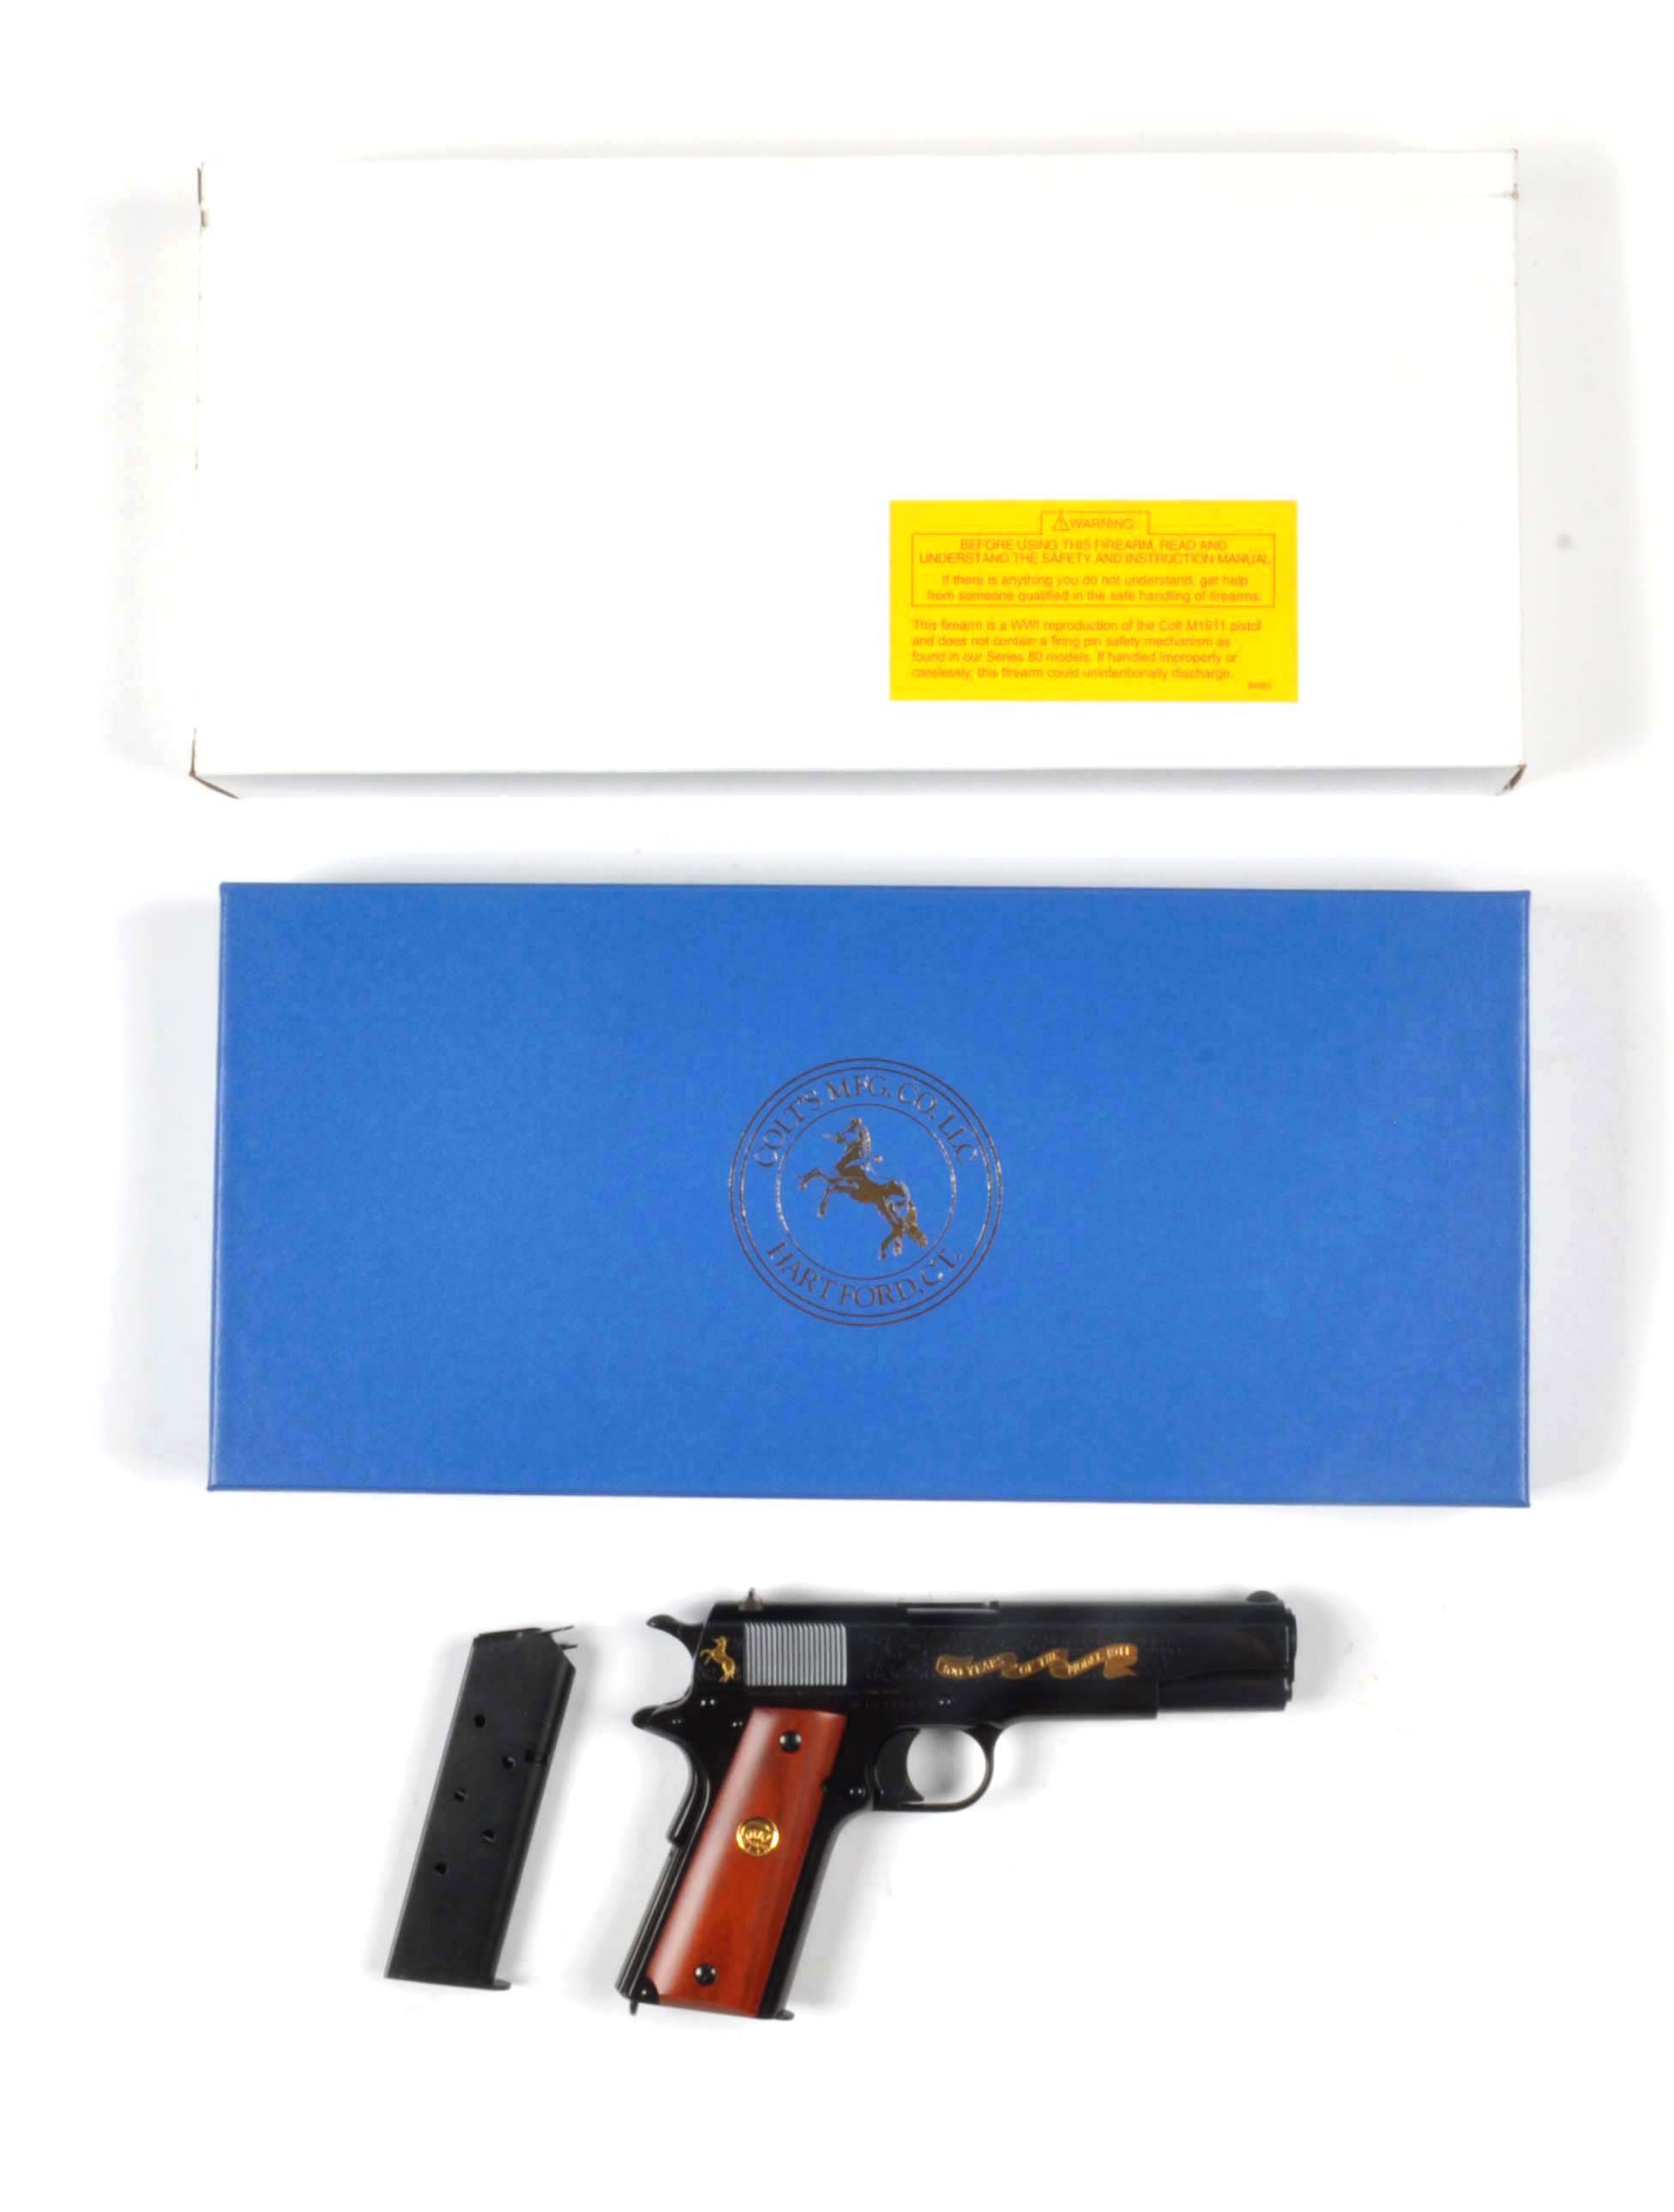 (M) Boxed Colt Model 1911 100 Yr Anniversary Pistol.